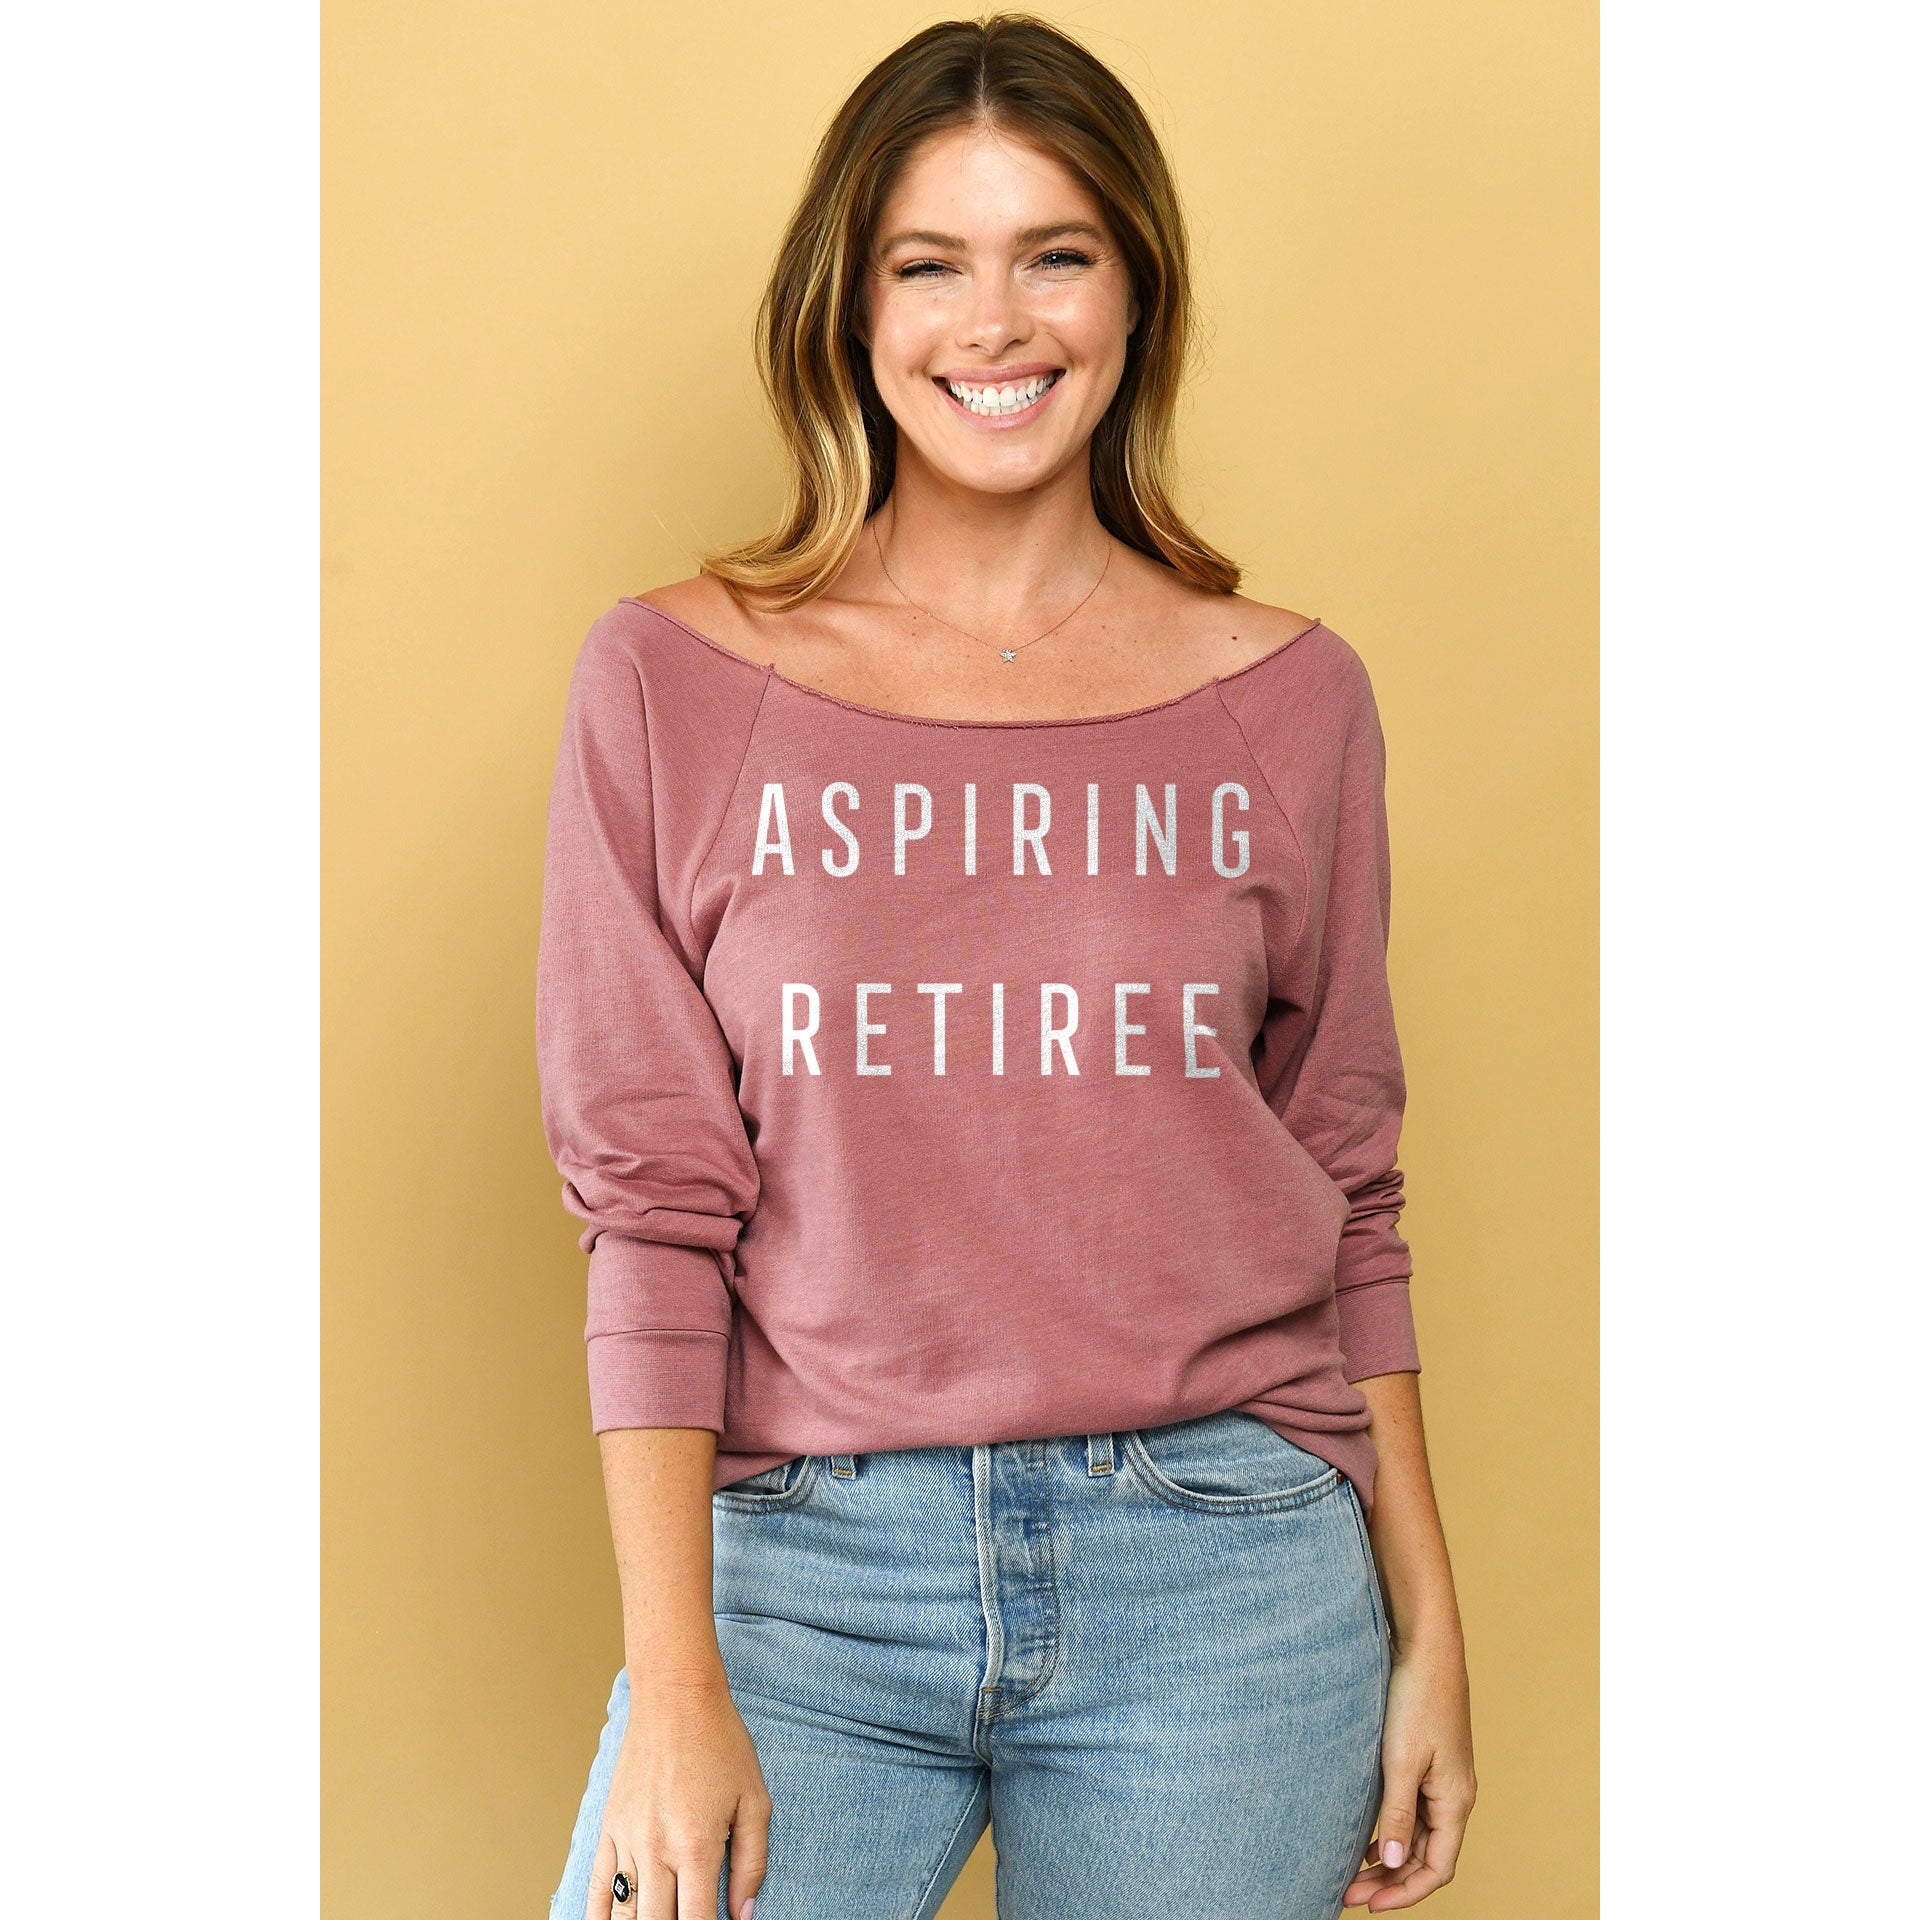 Aspiring Retiree - Stories You Can Wear